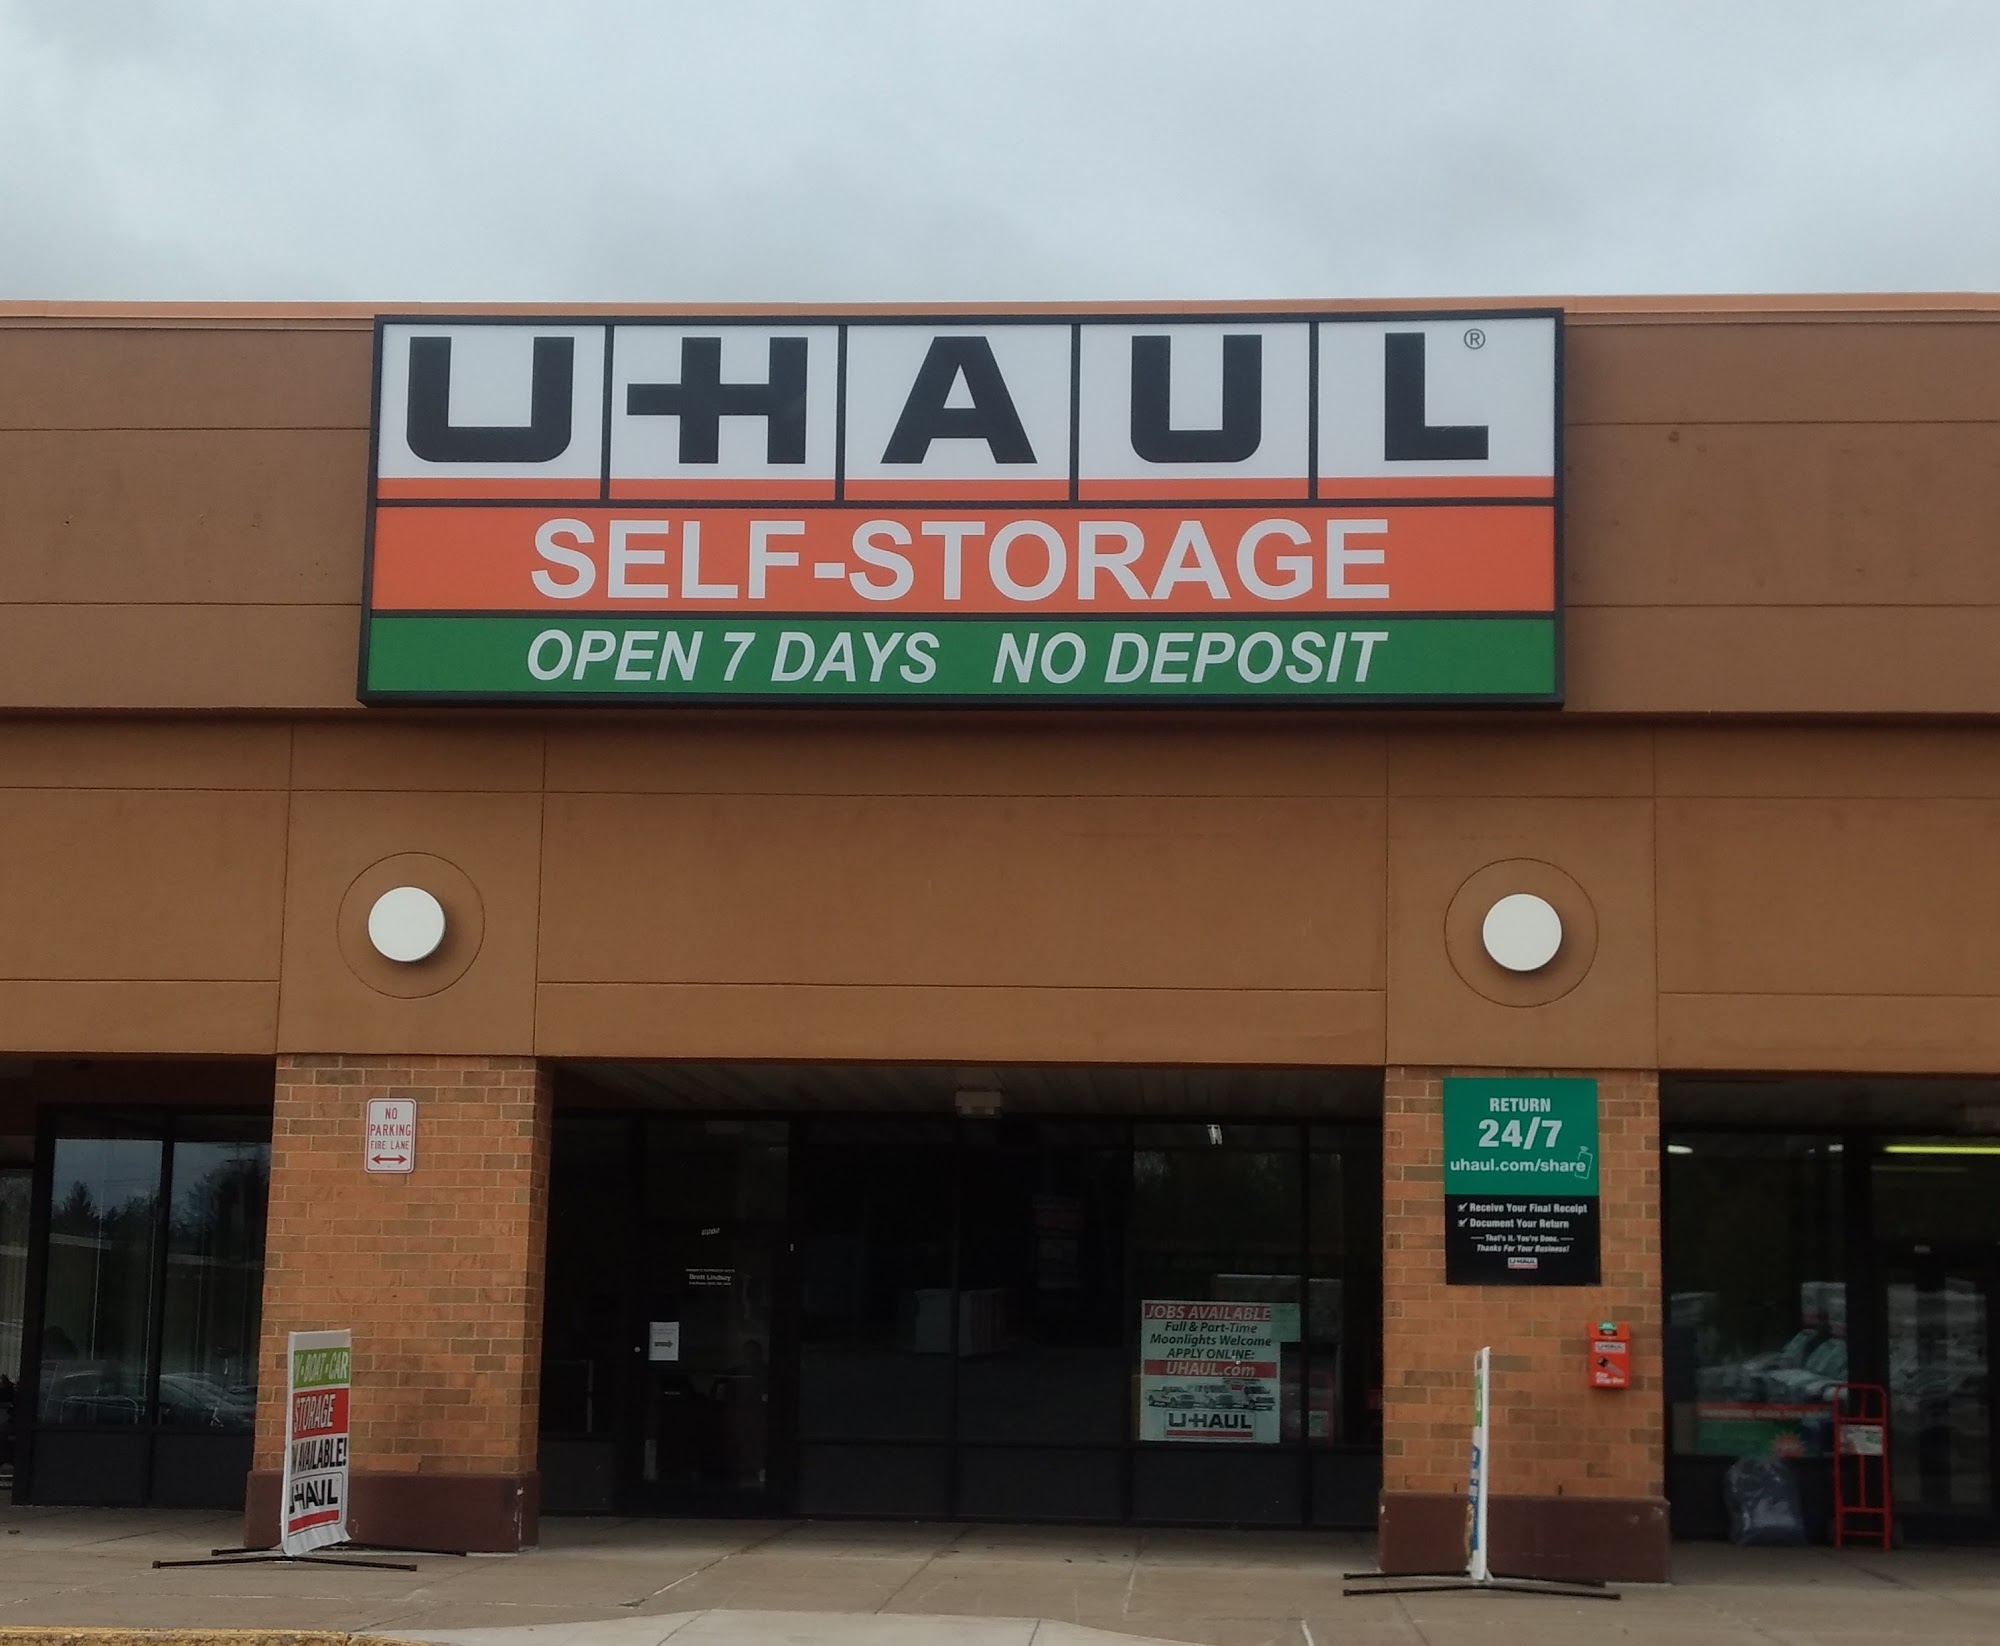 U-Haul Moving & Storage at Seneca Mall